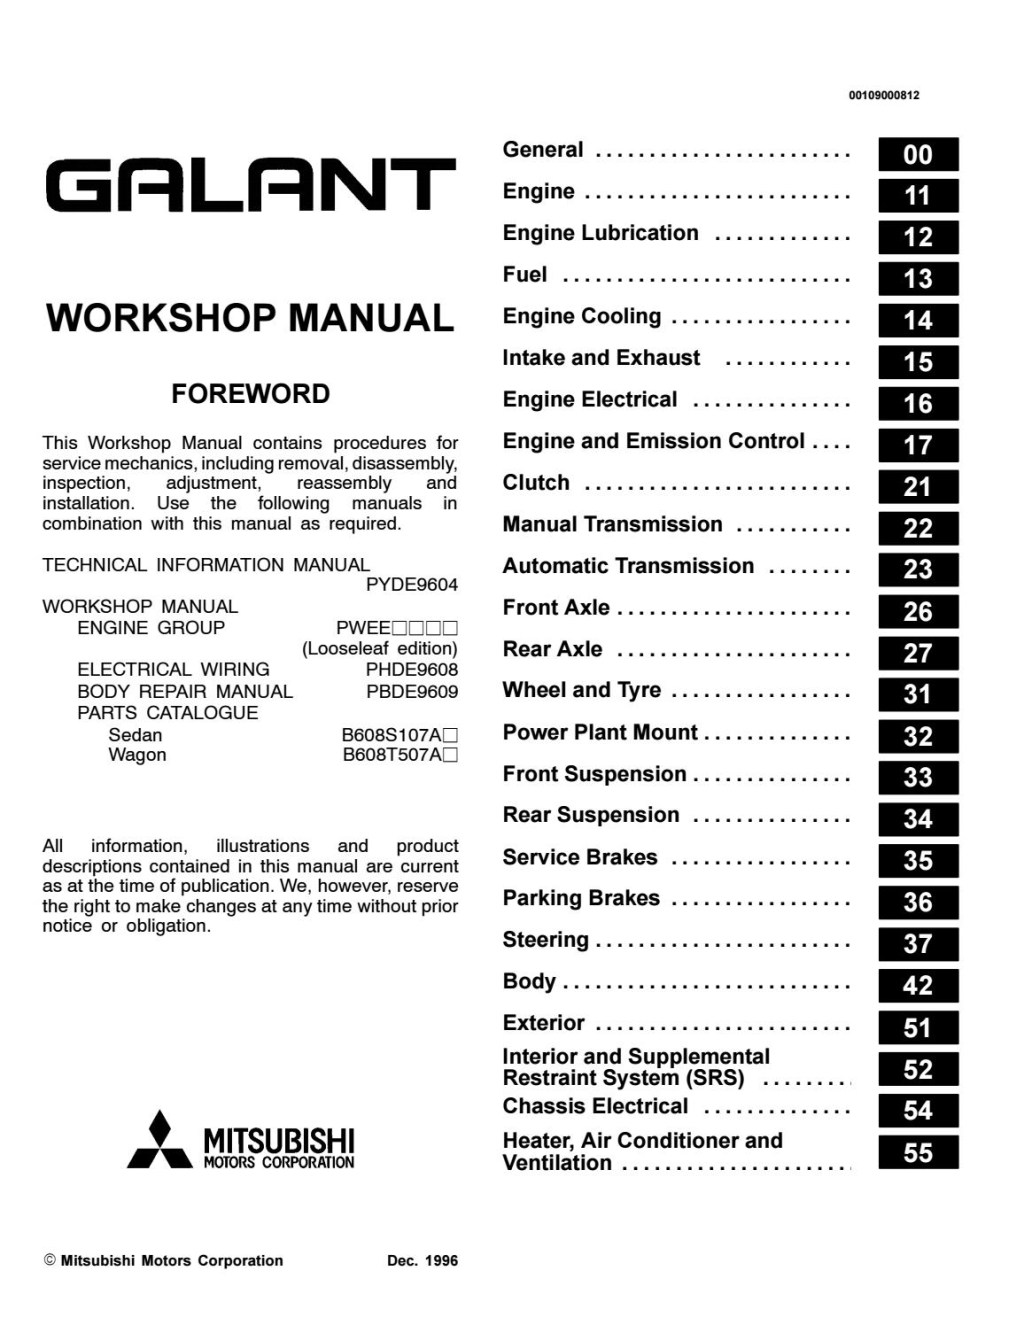 Picture of: Mitsubishi Galant Service Repair Manual by gu – Issuu